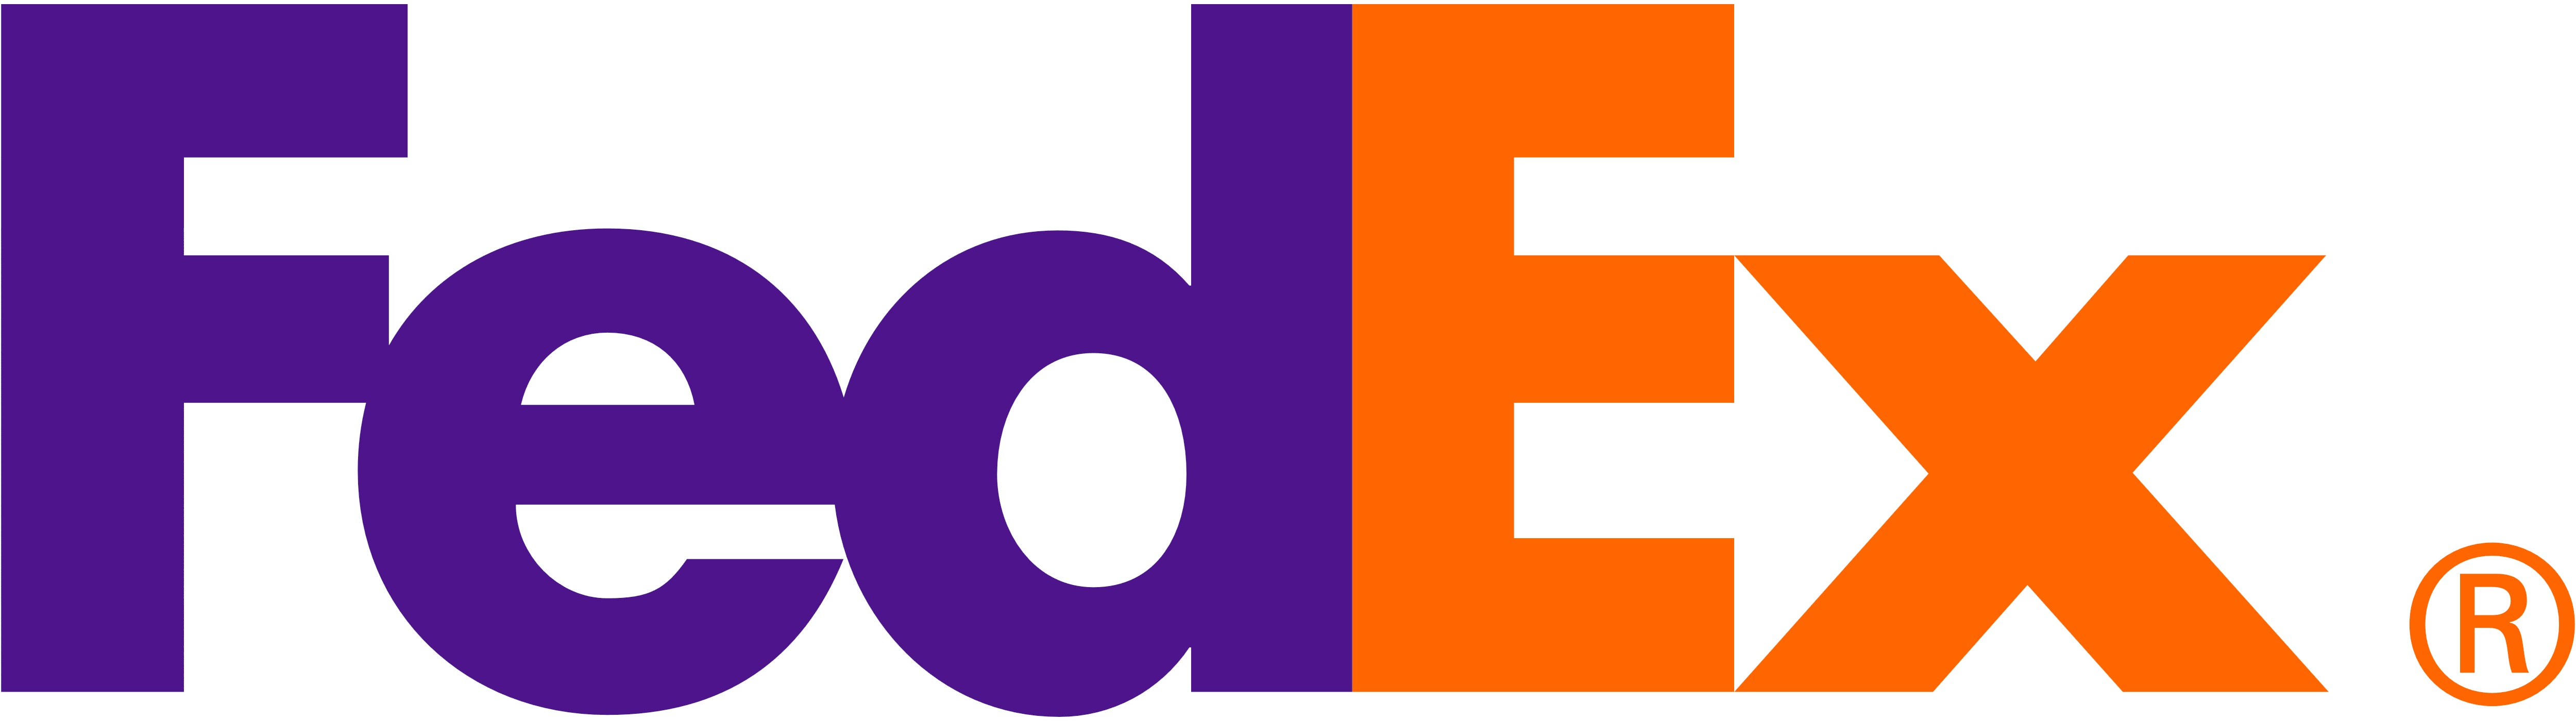 Fedex Logo PNG High-Quality Image